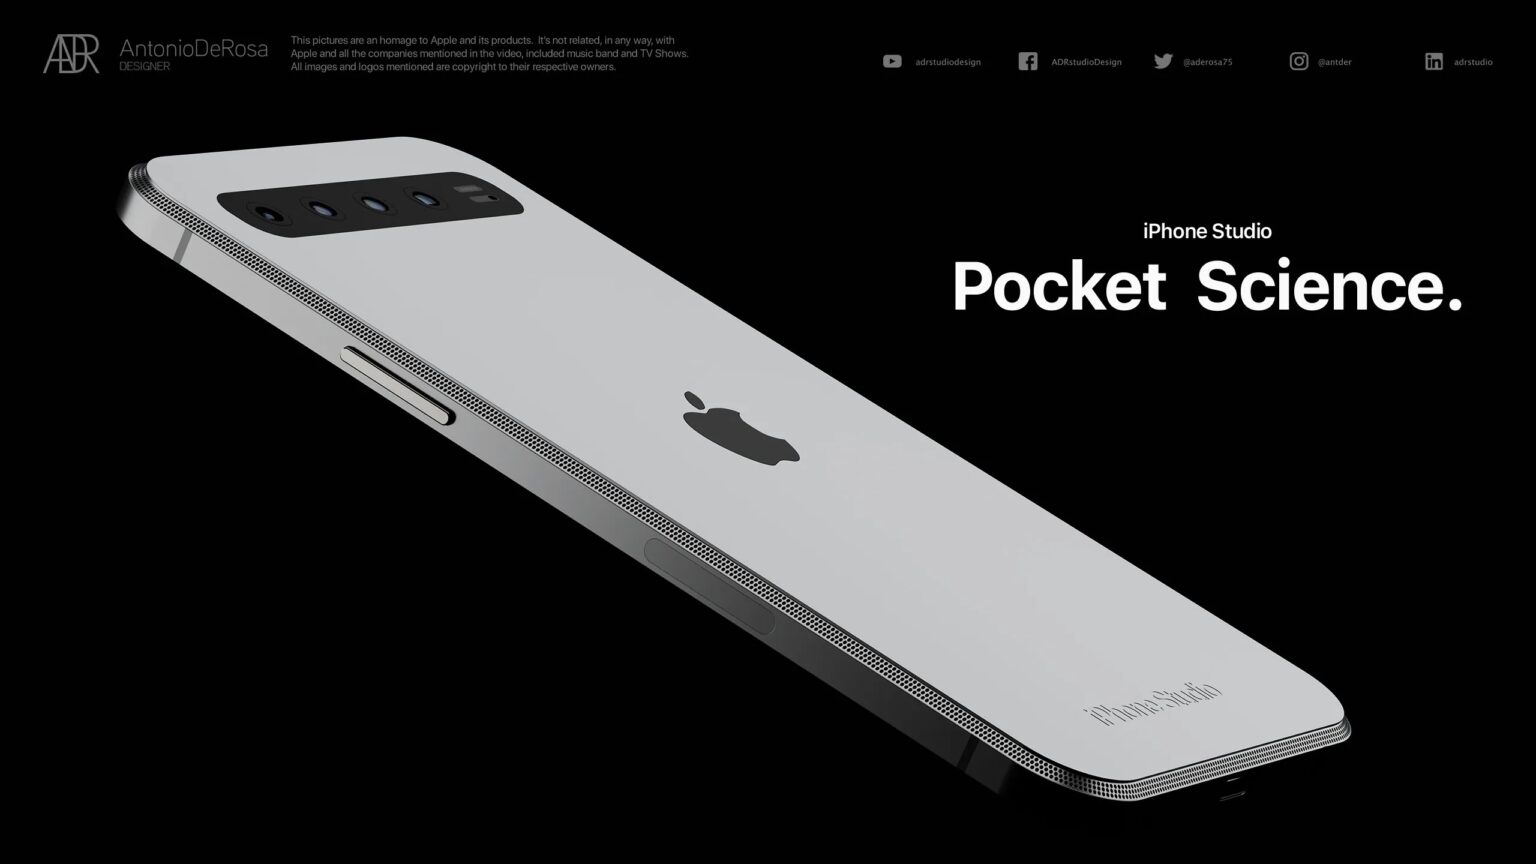 Meet the iPhone Studio, a design concept by Antonio De Rosa based on the Mac Studio.